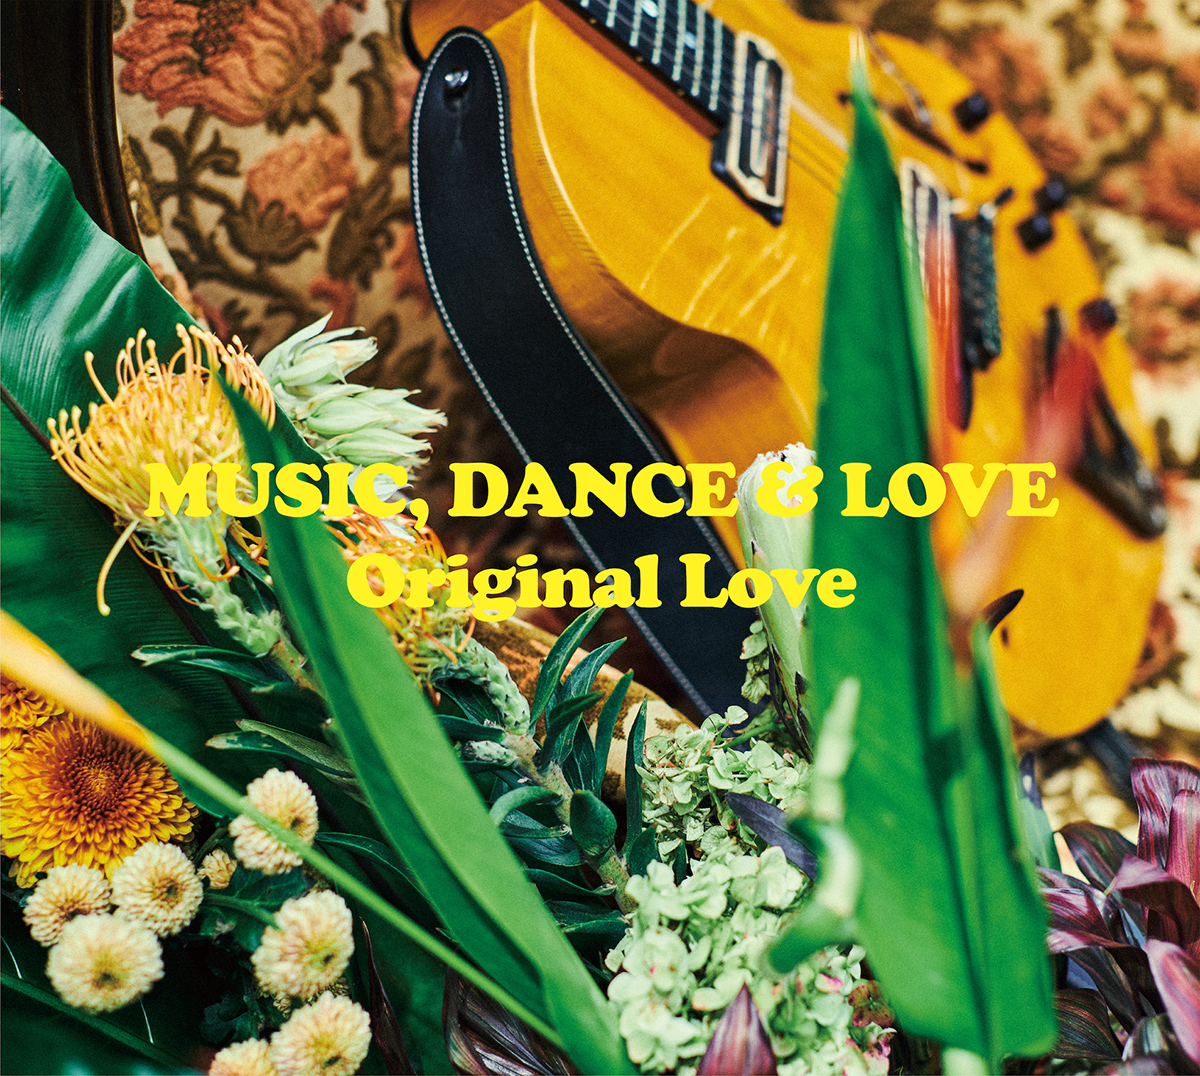 Artwork : Music, Dance & Love